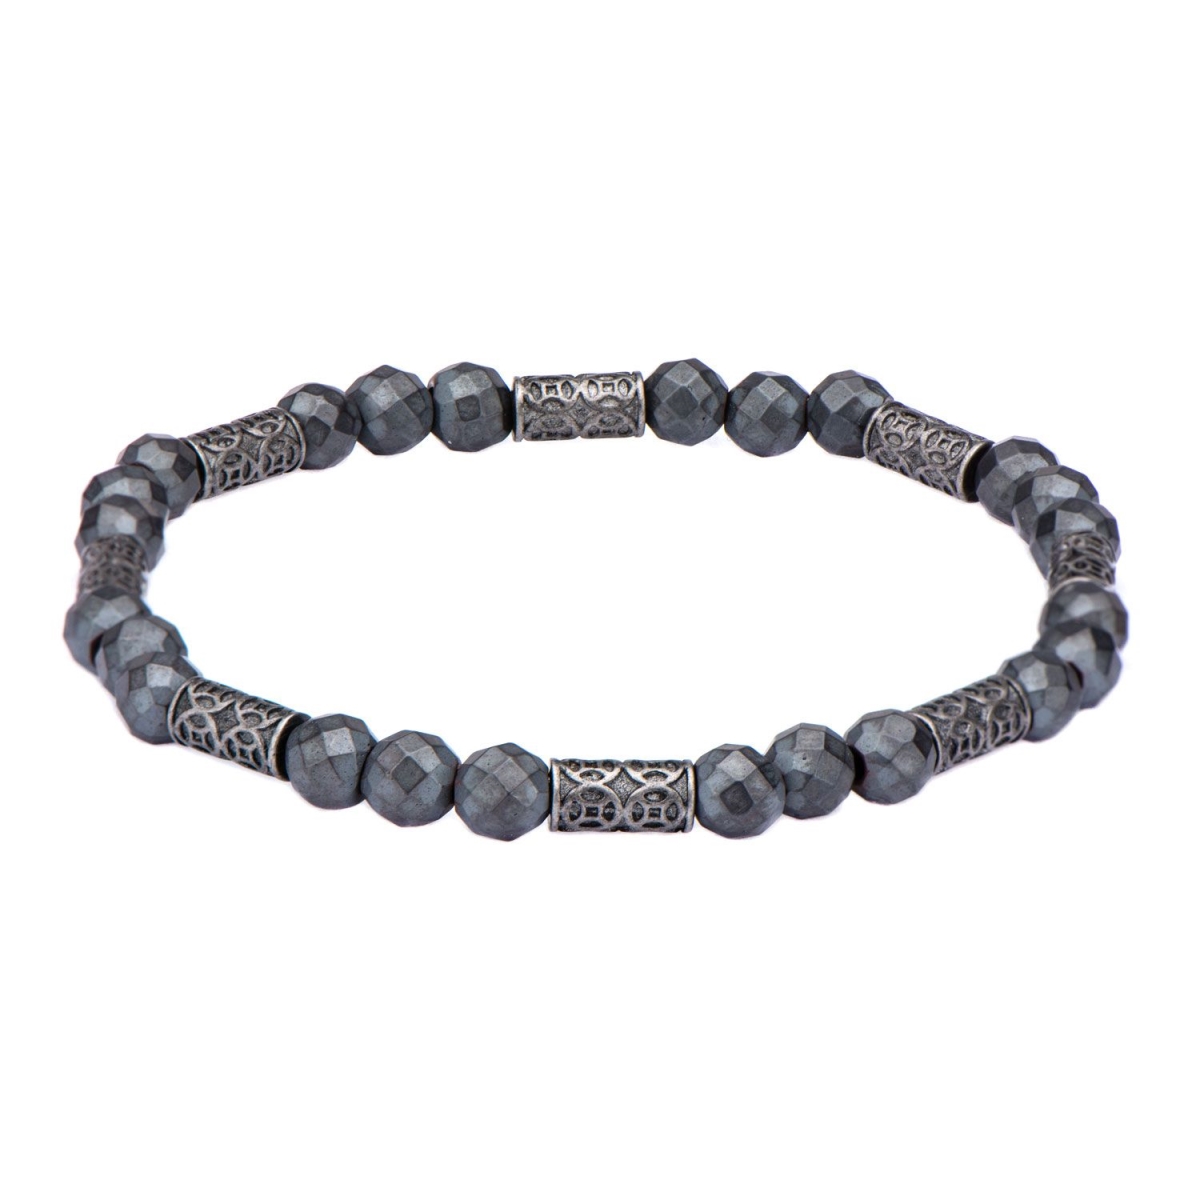 Br20171gryhm Grey Hematite With Antique Steel Beads Bracelet